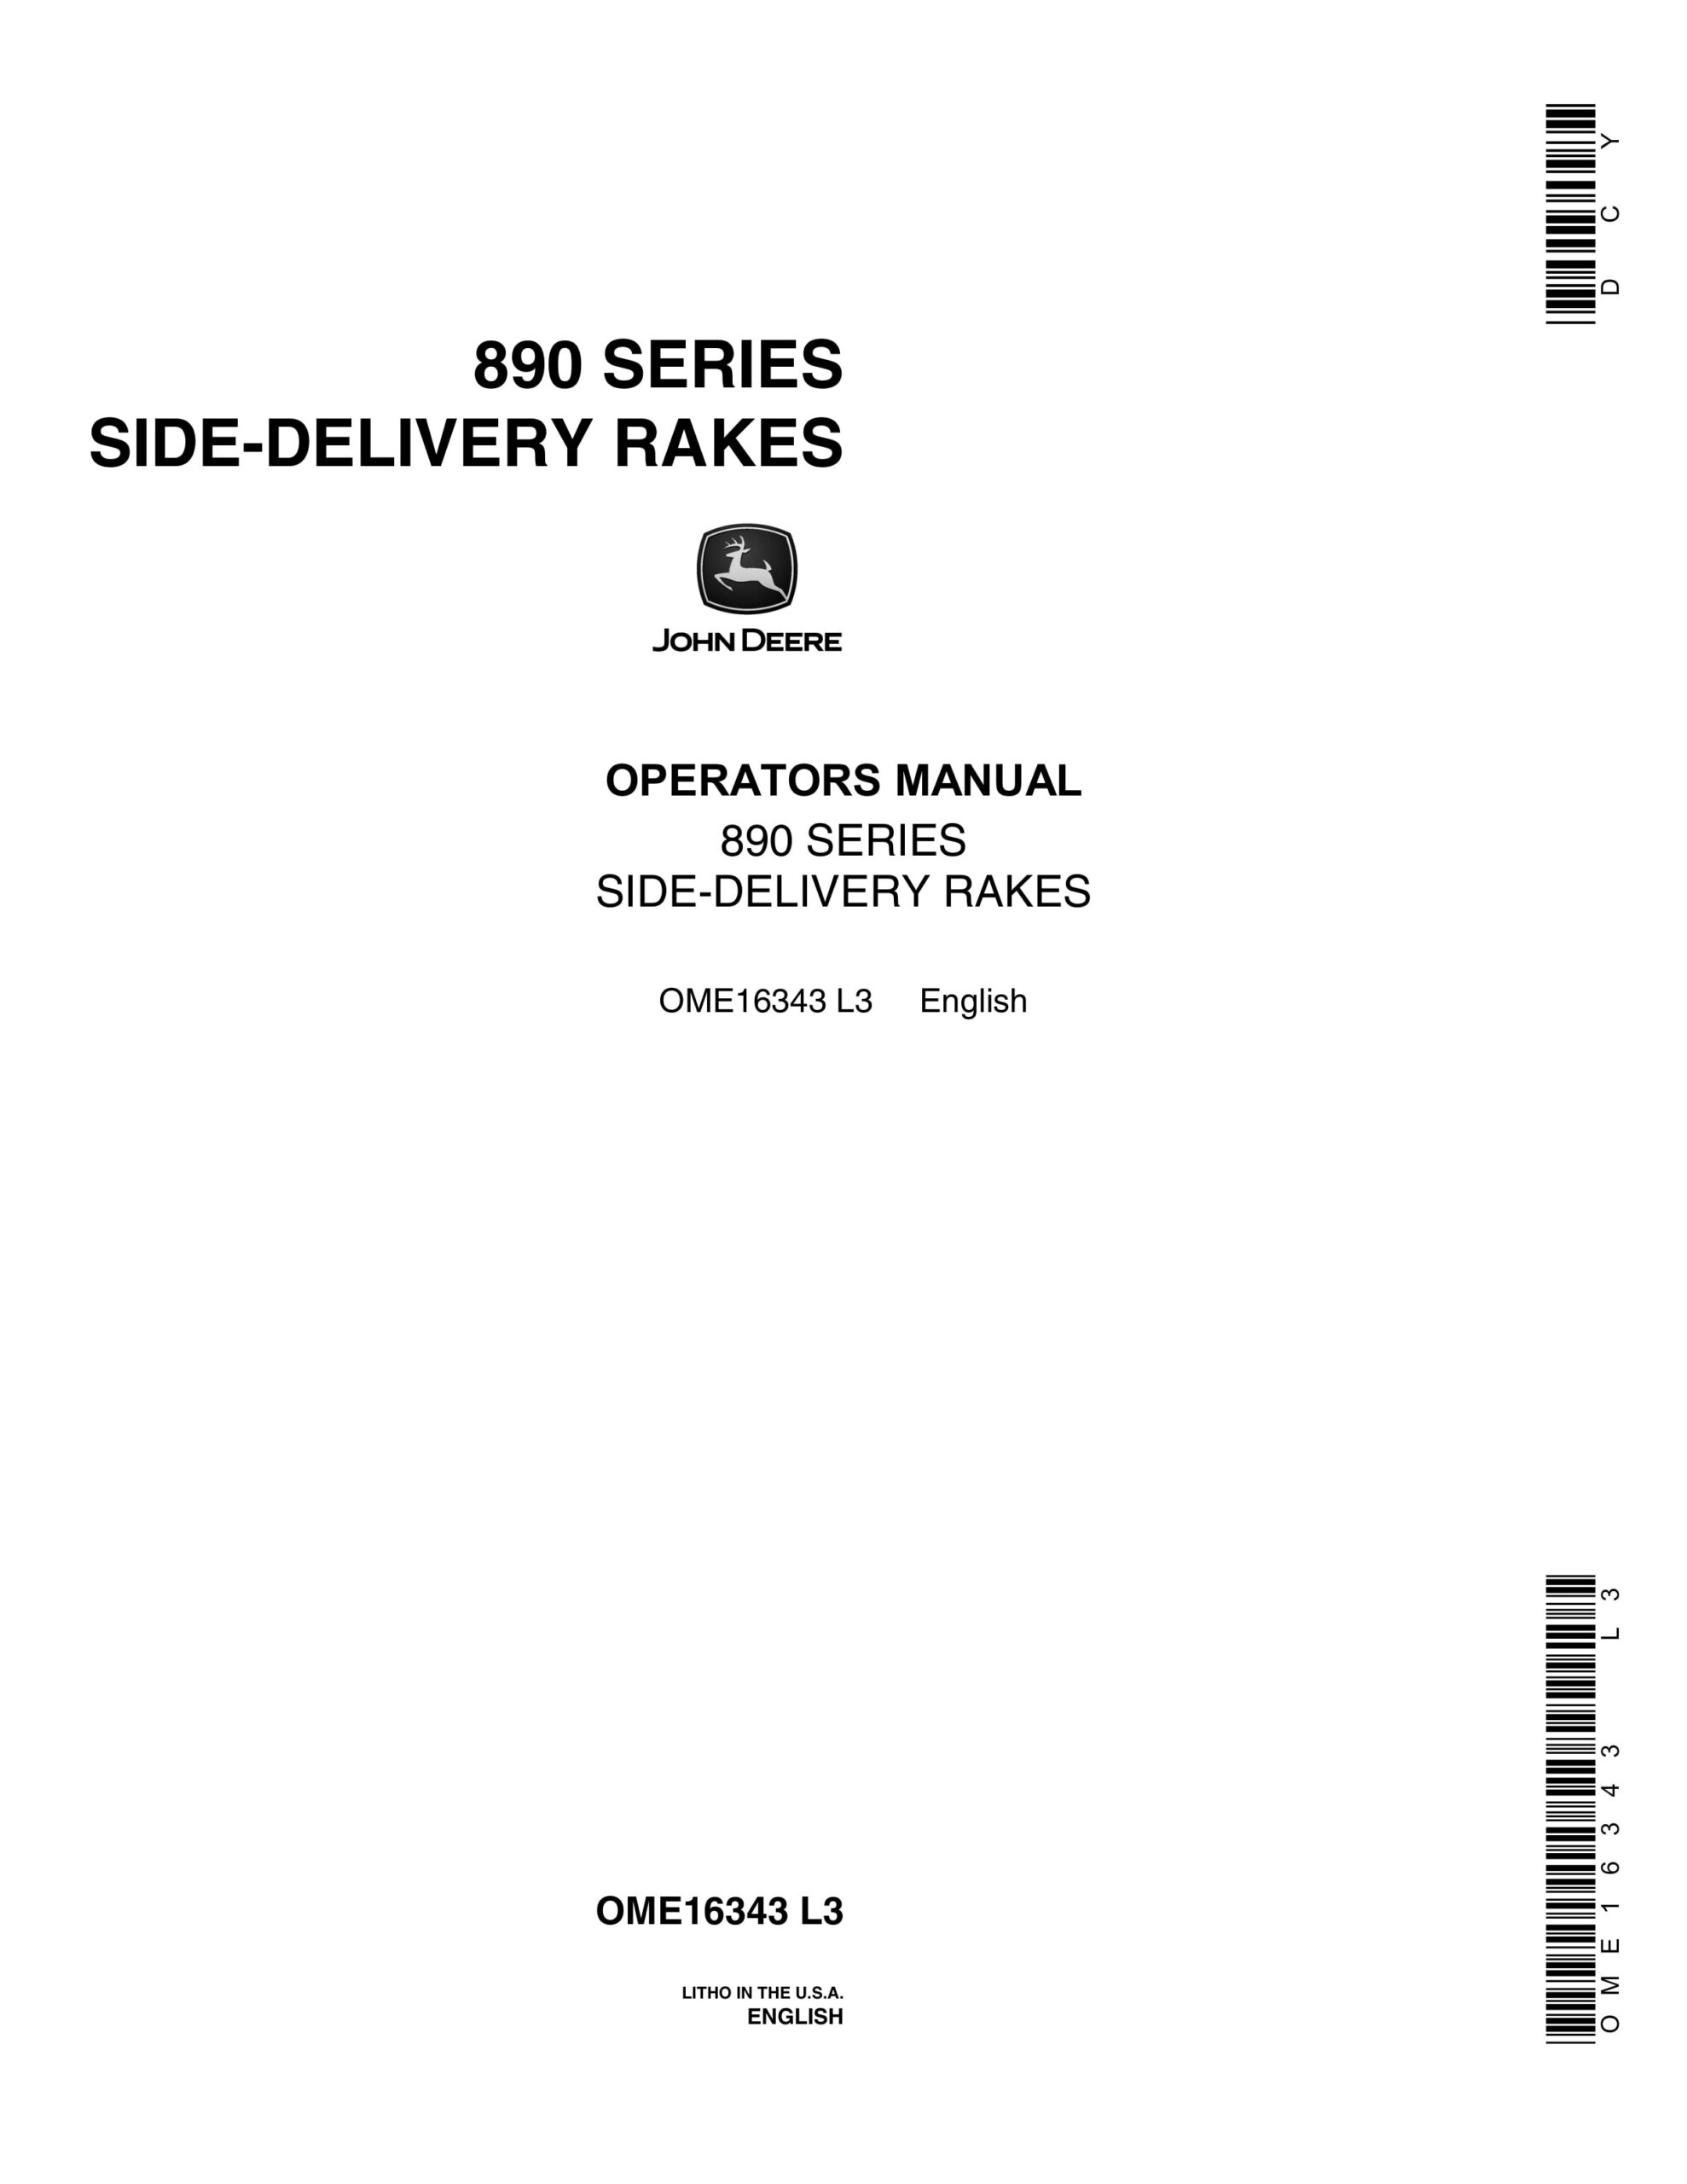 John Deere 890 SERIES SIDE-DELIVERY RAKE Operator Manual OME16343-1